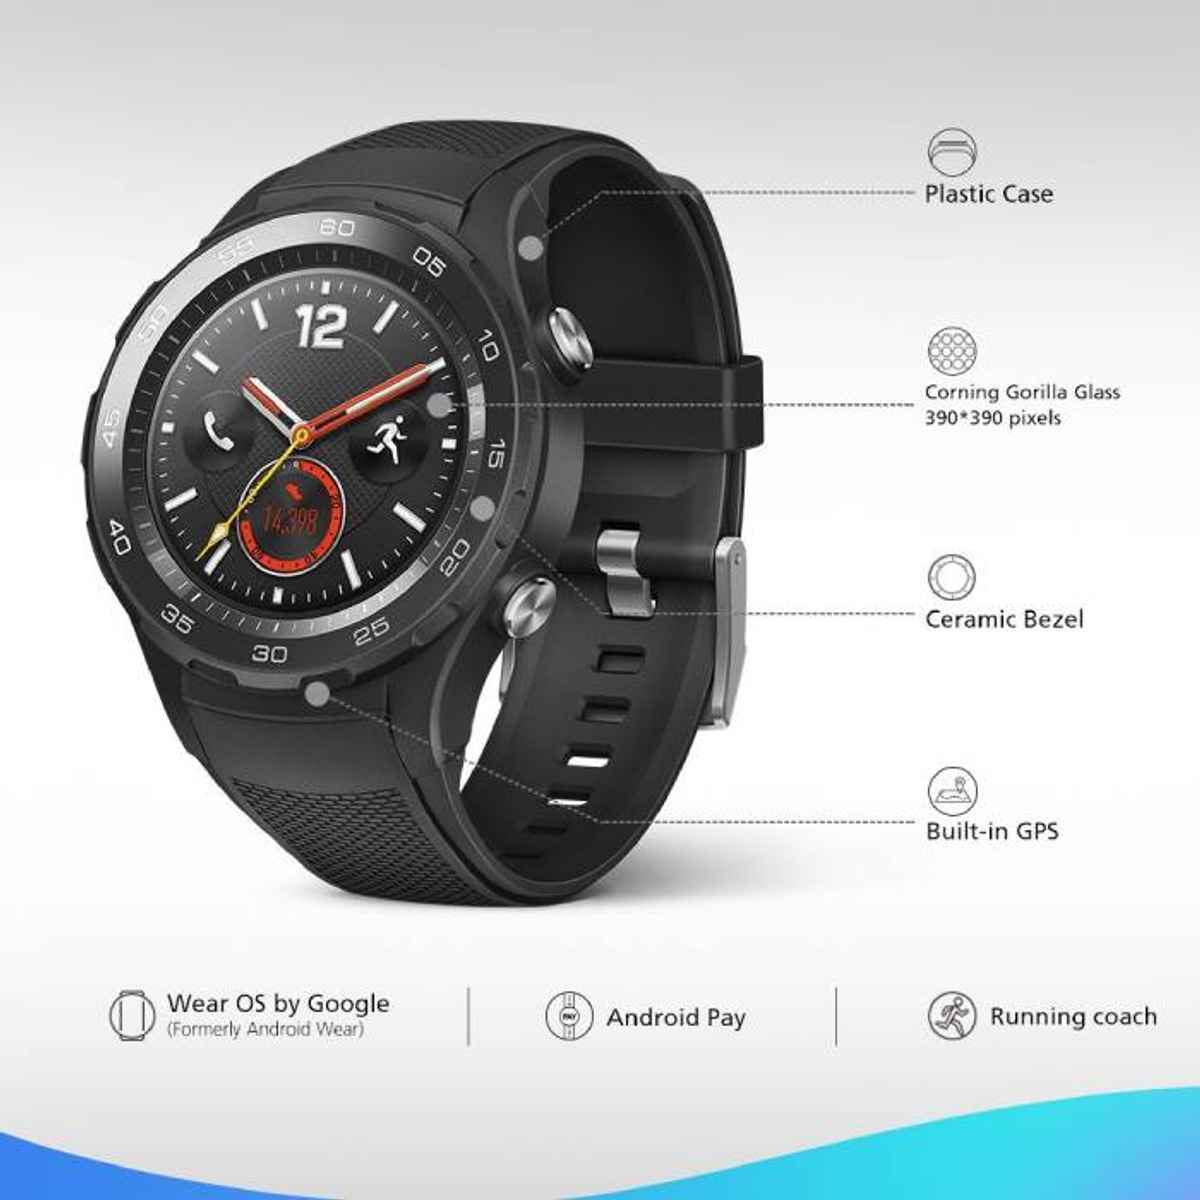 Huawei Watch 2 - Android Wear 2.0 Smartwatch